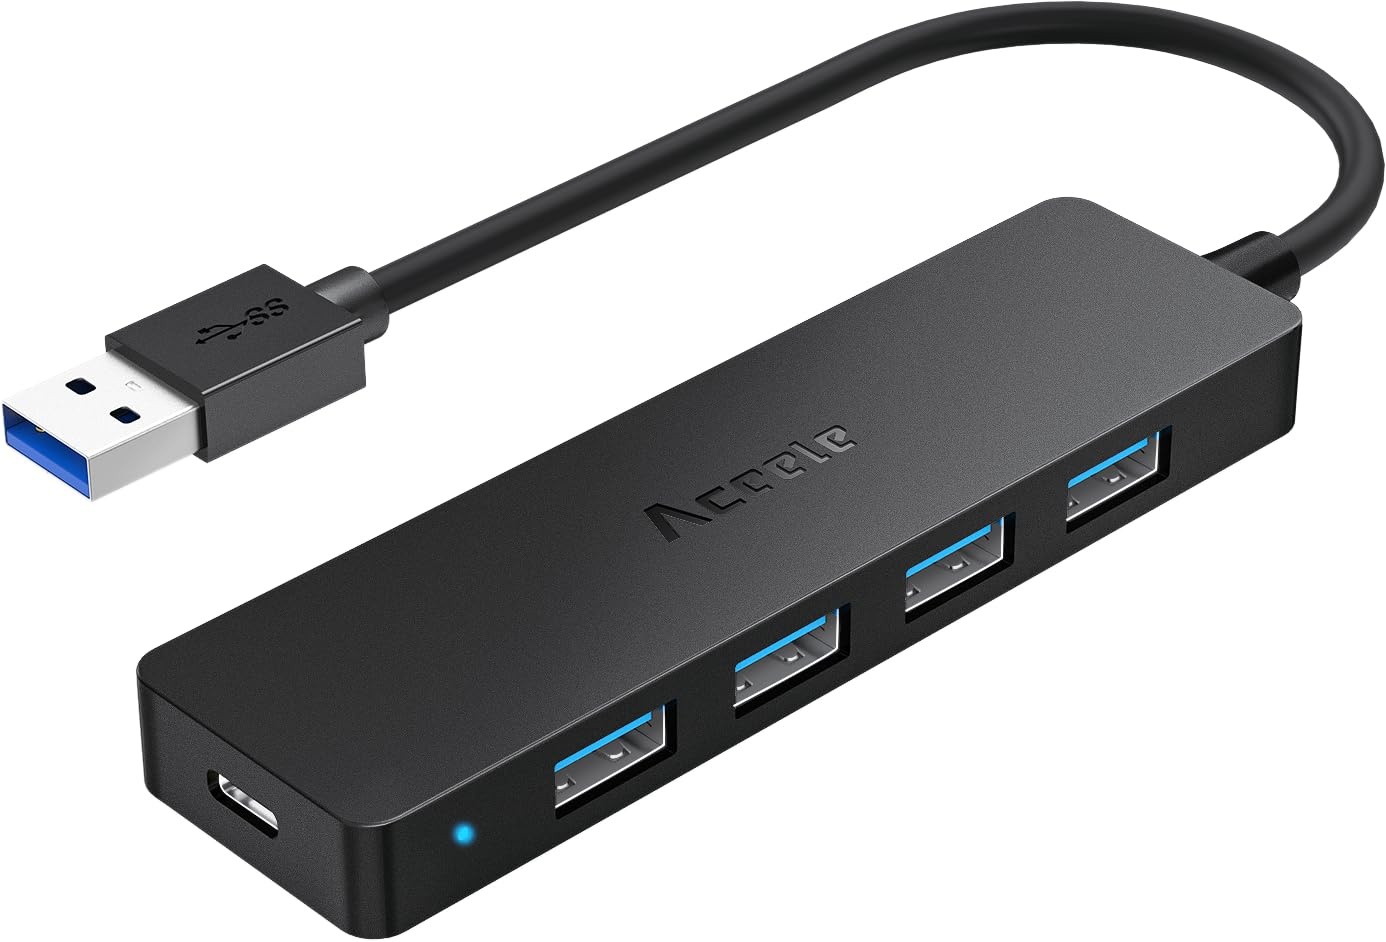 Aceele USB Hub 3.0, USB Verteiler mit 4-Port USB Ultra Slim Extra Leicht Portable Datanhub, für MacBook Pro/Air/Mini, iMac, Notebook PC, Laptop, HDD Mobile Festplatte